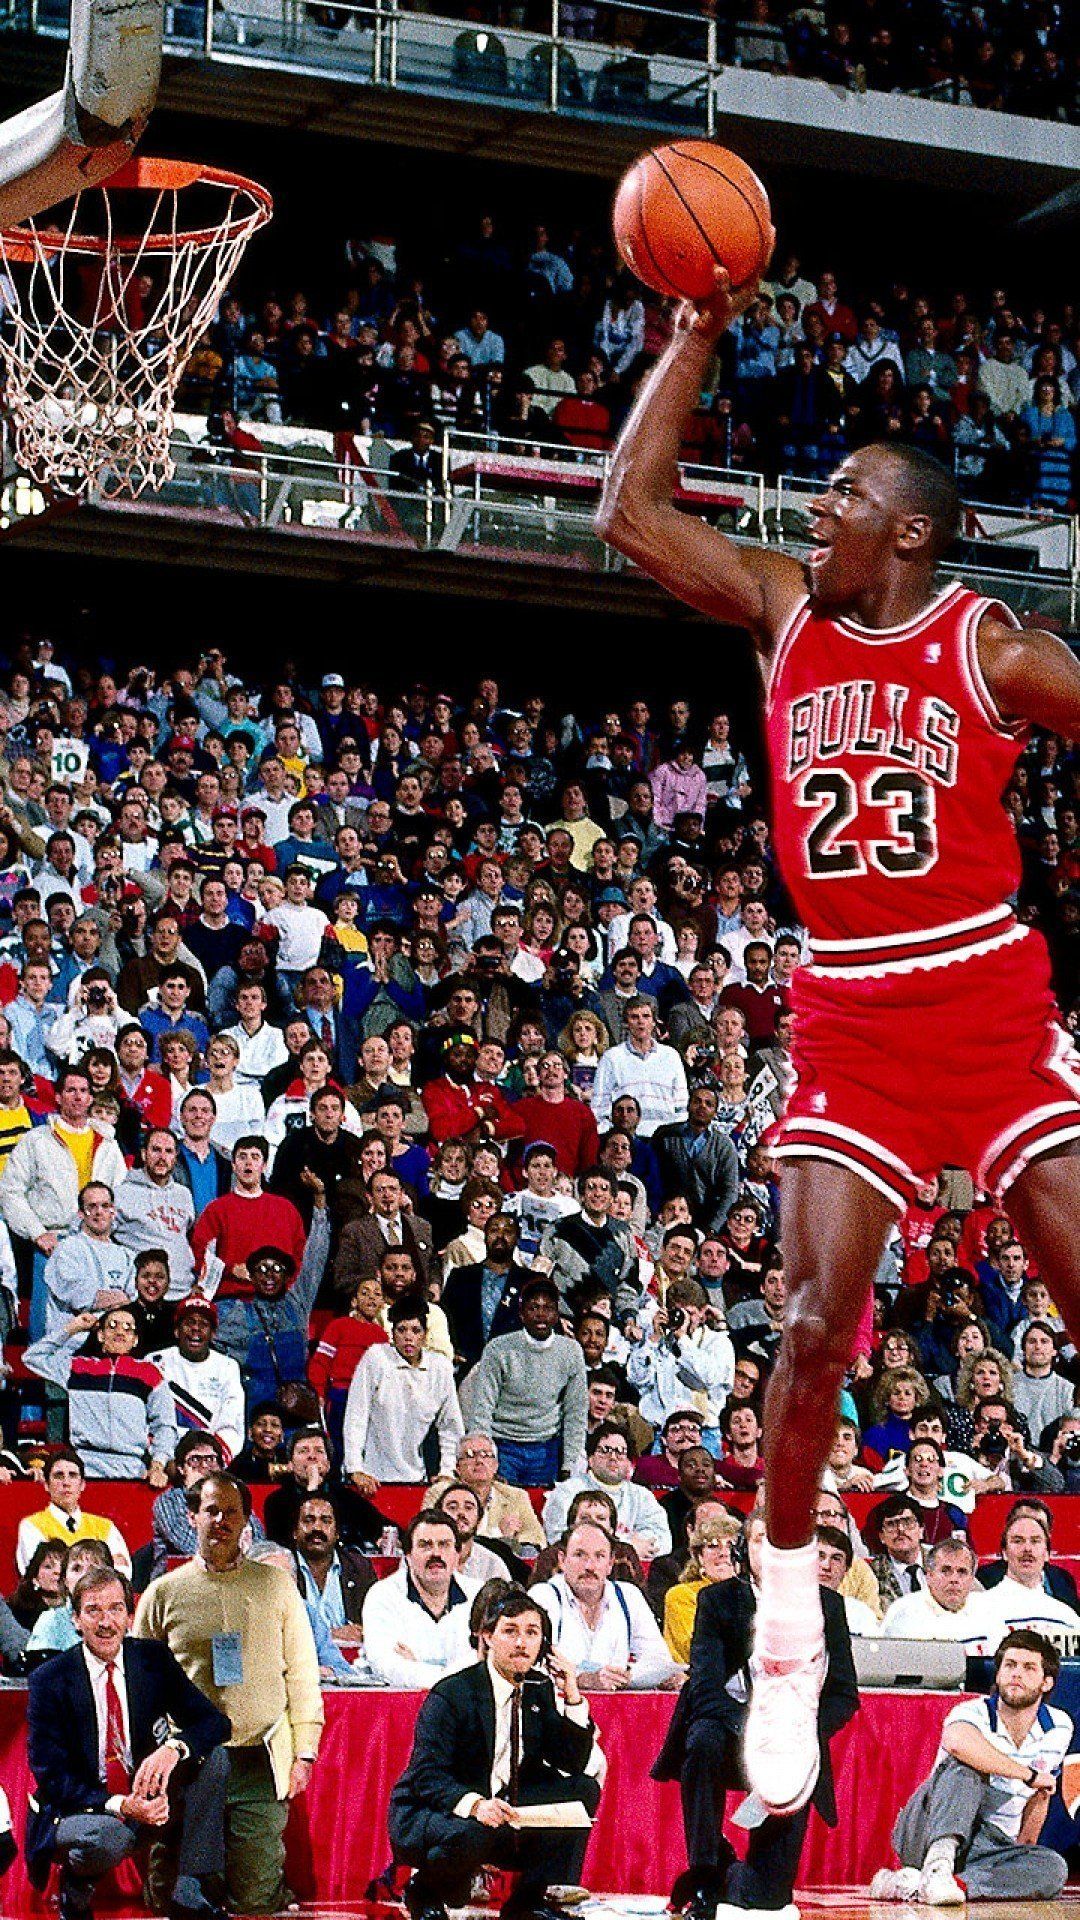 Michael Jordan Free Throw Dunk Wallpapers